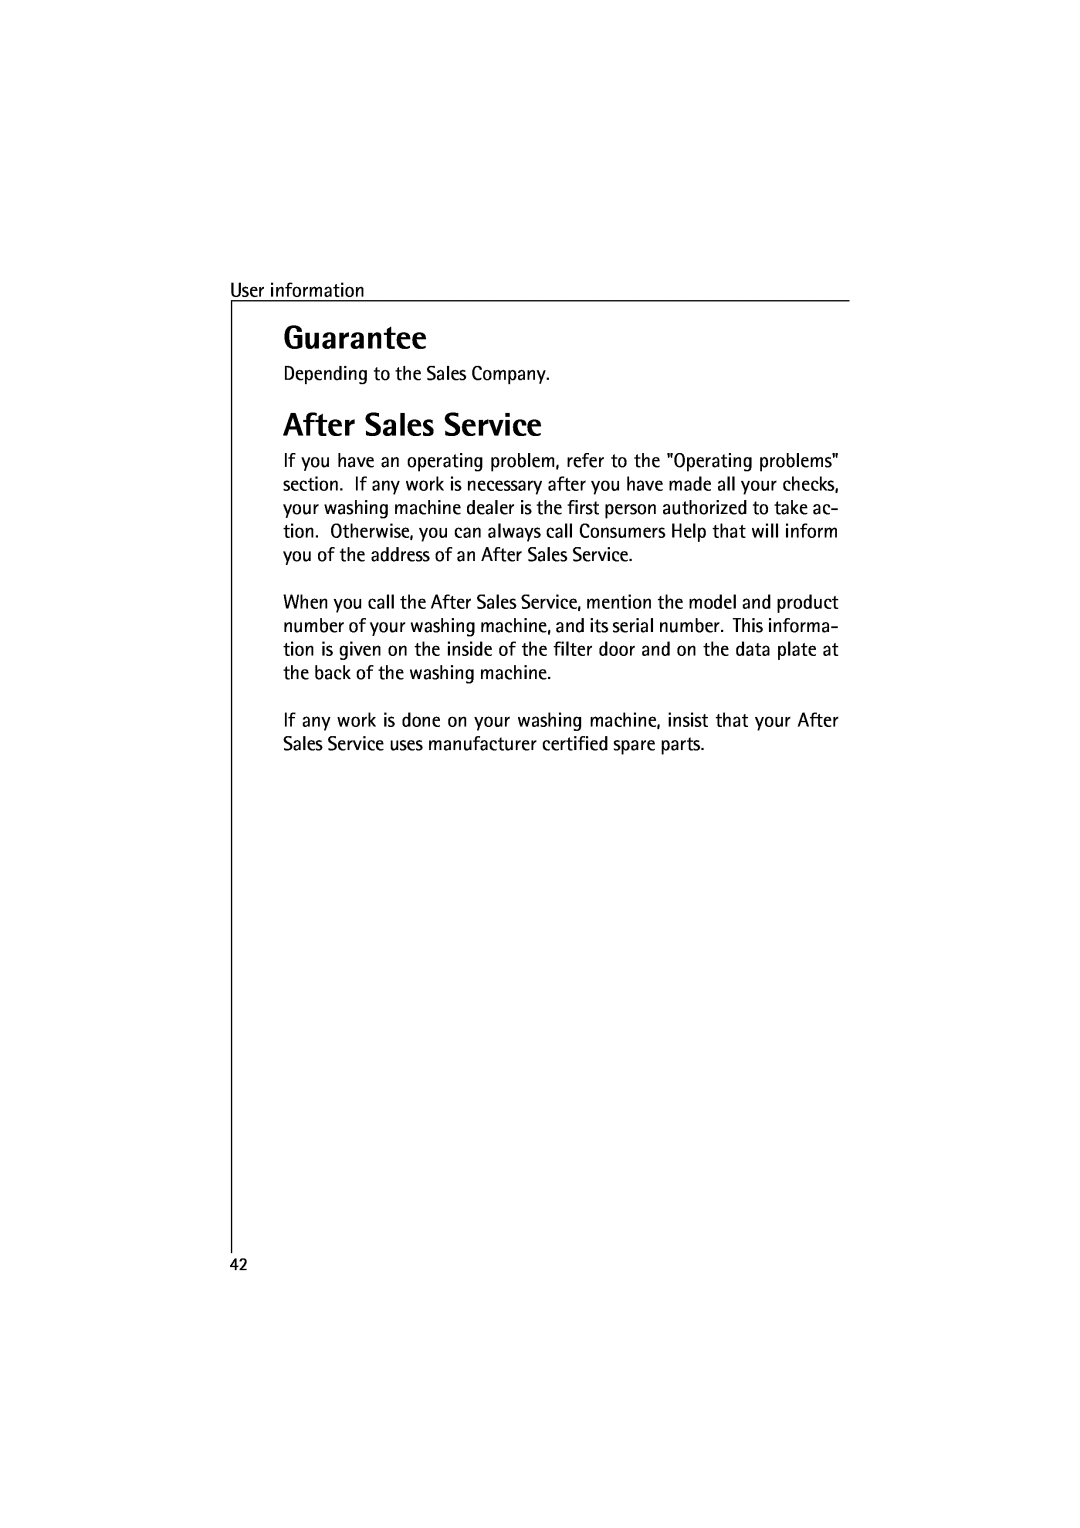 AEG 48380 manual Guarantee, After Sales Service 